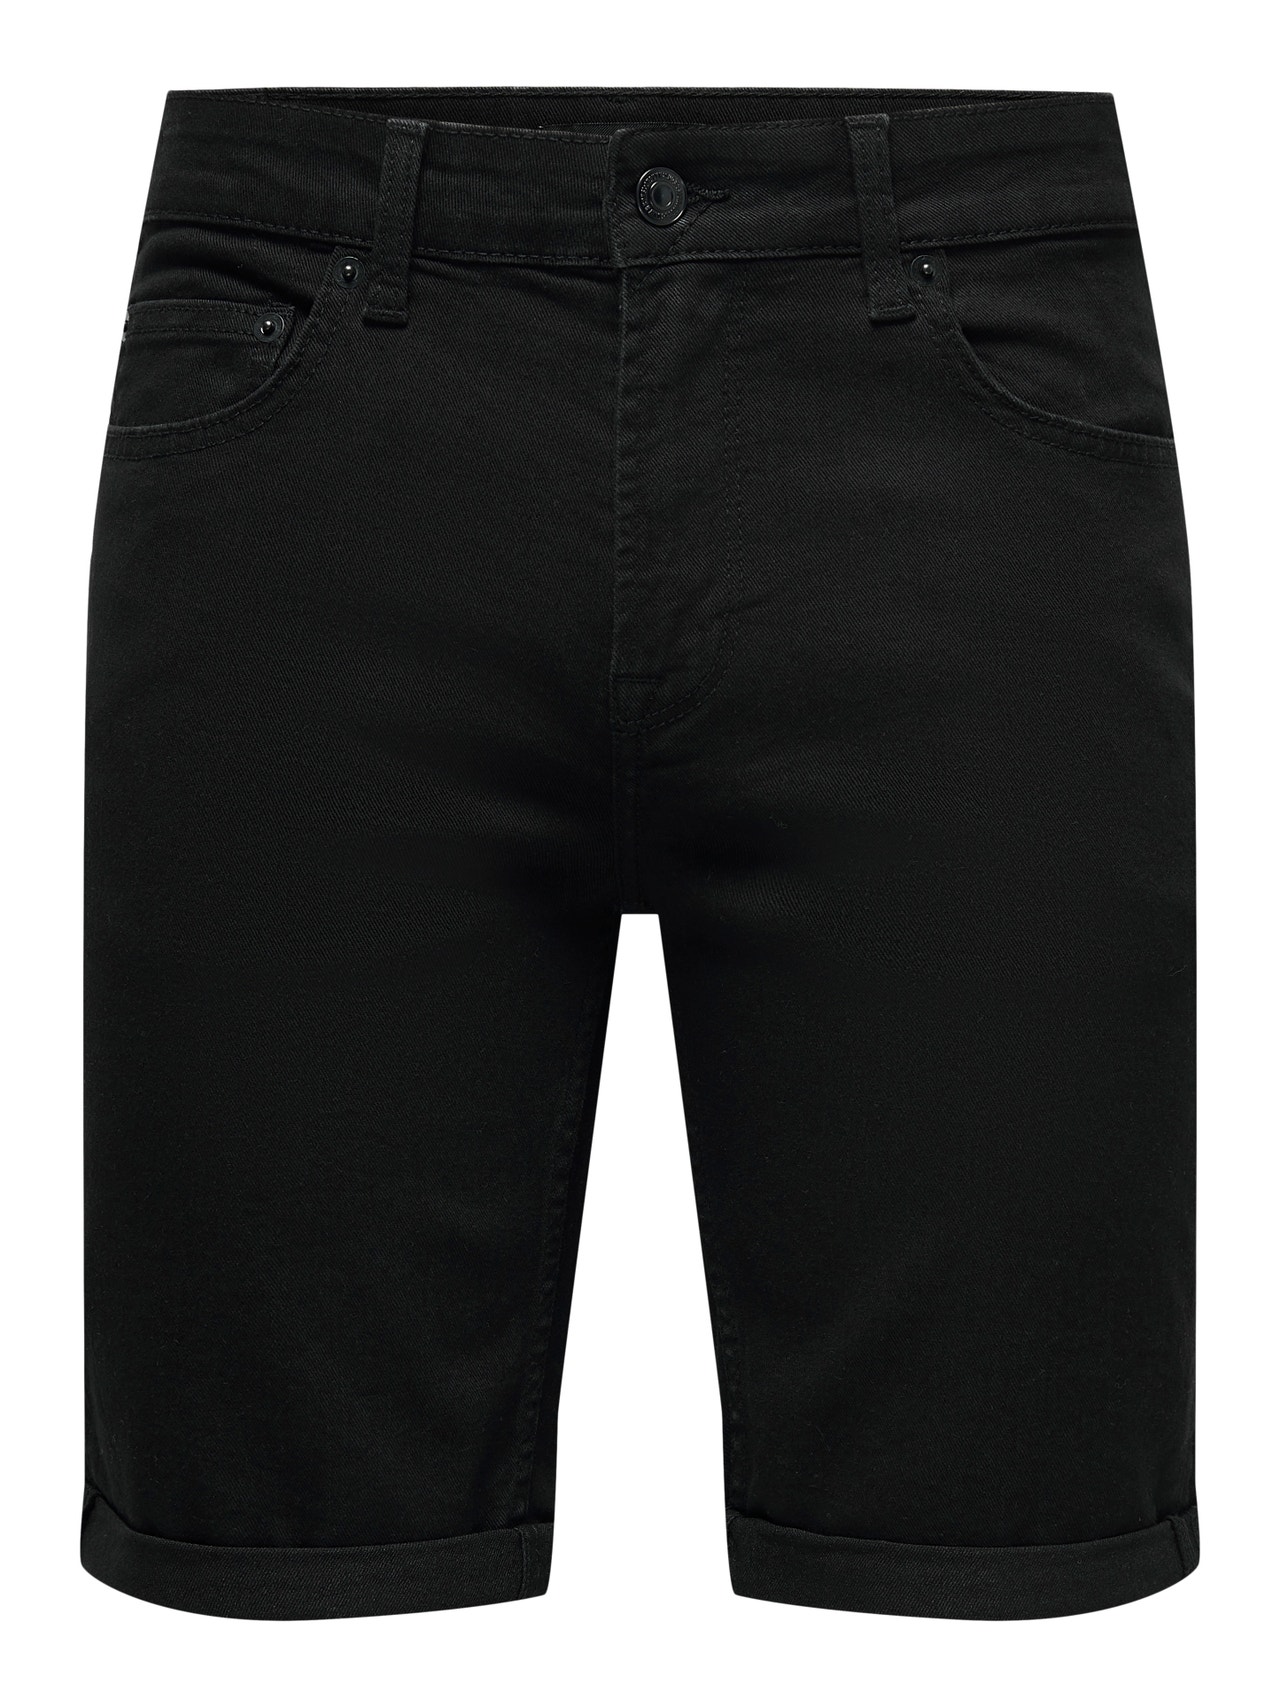 ONLY & SONS Regular fit Regular rise Shorts -Black - 22026618